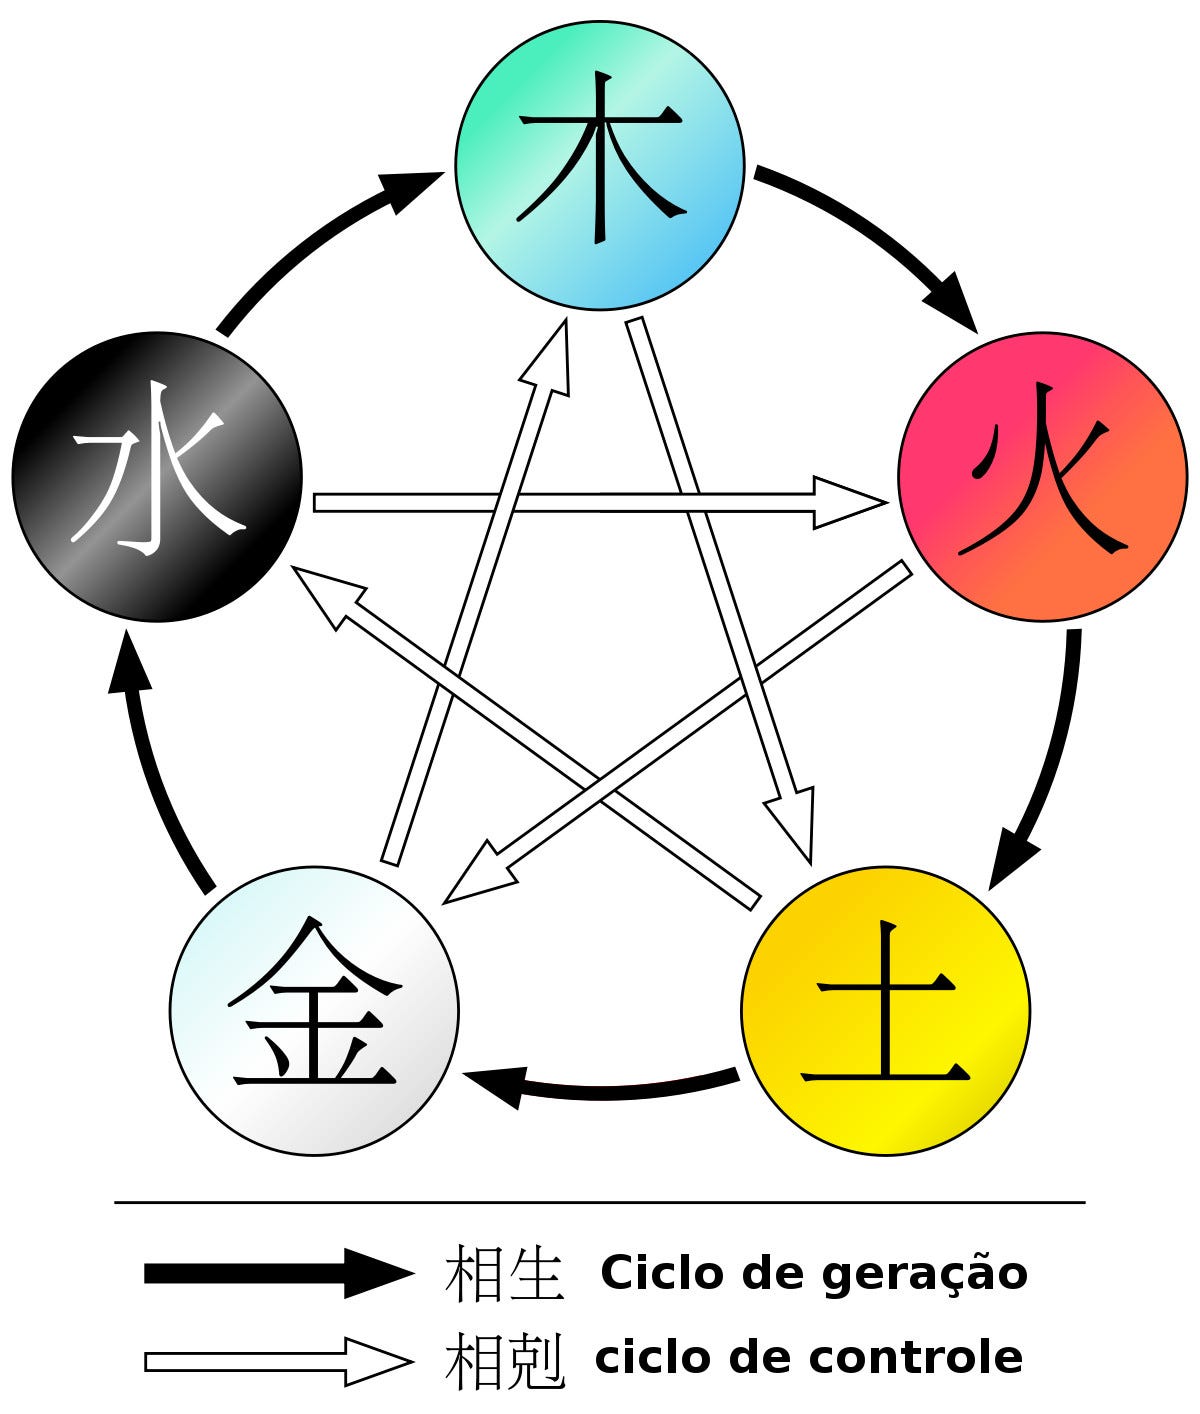 Bandeira Yin-yang, Equilibrio, Taoismo, Lao Tzu, Filosofia